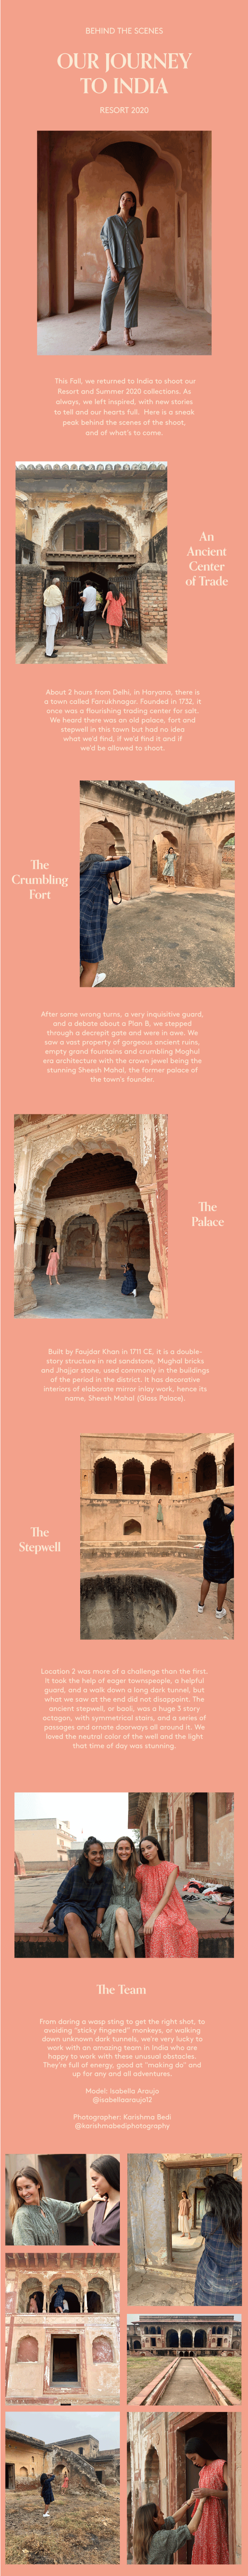 mirth photoshoot haveli palace in india